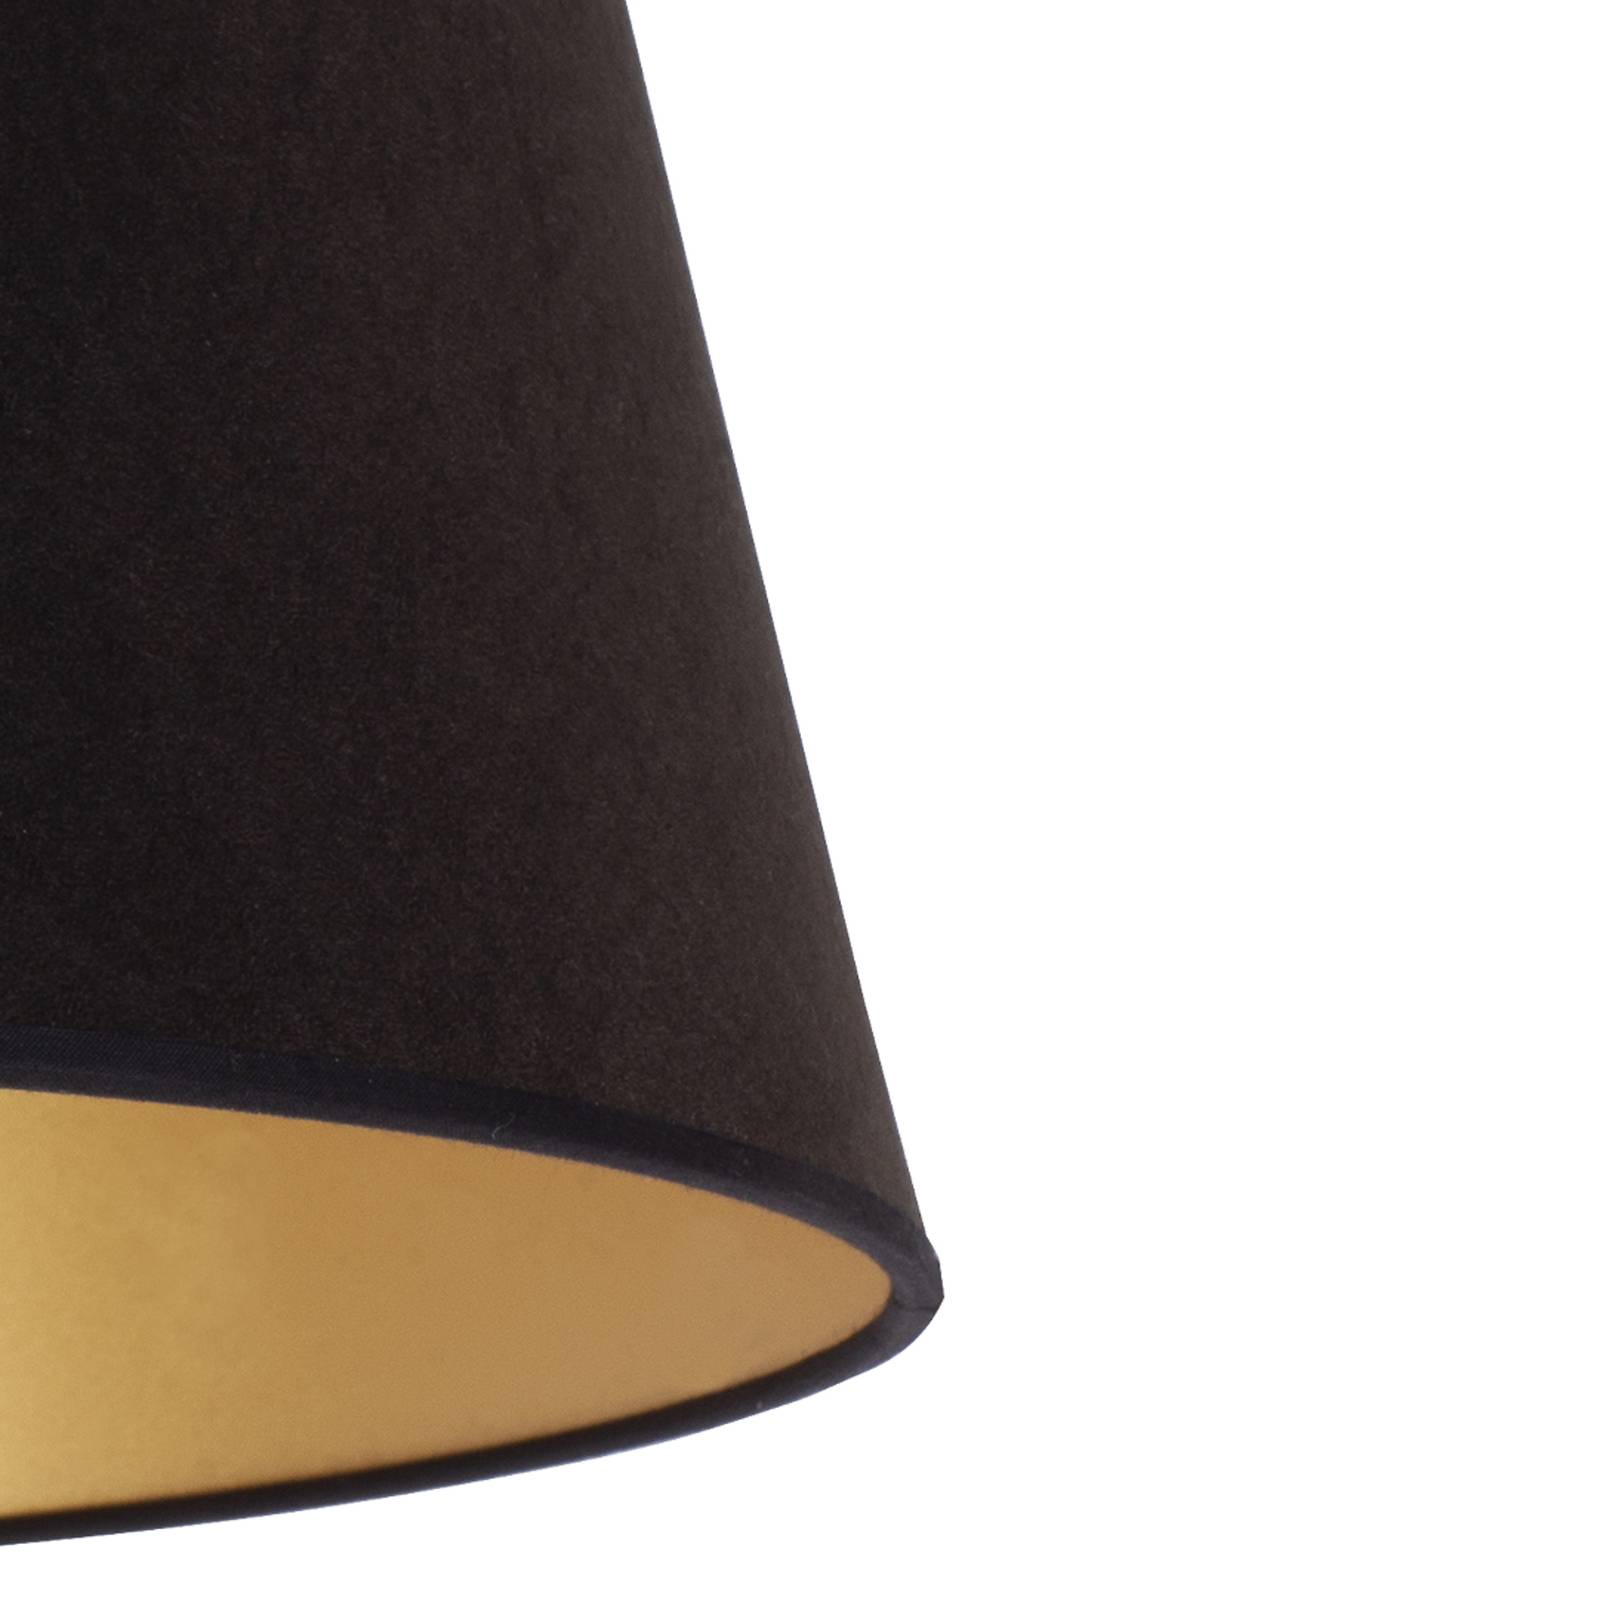 Duolla Cone lampskärm höjd 25,5 cm svart/guld